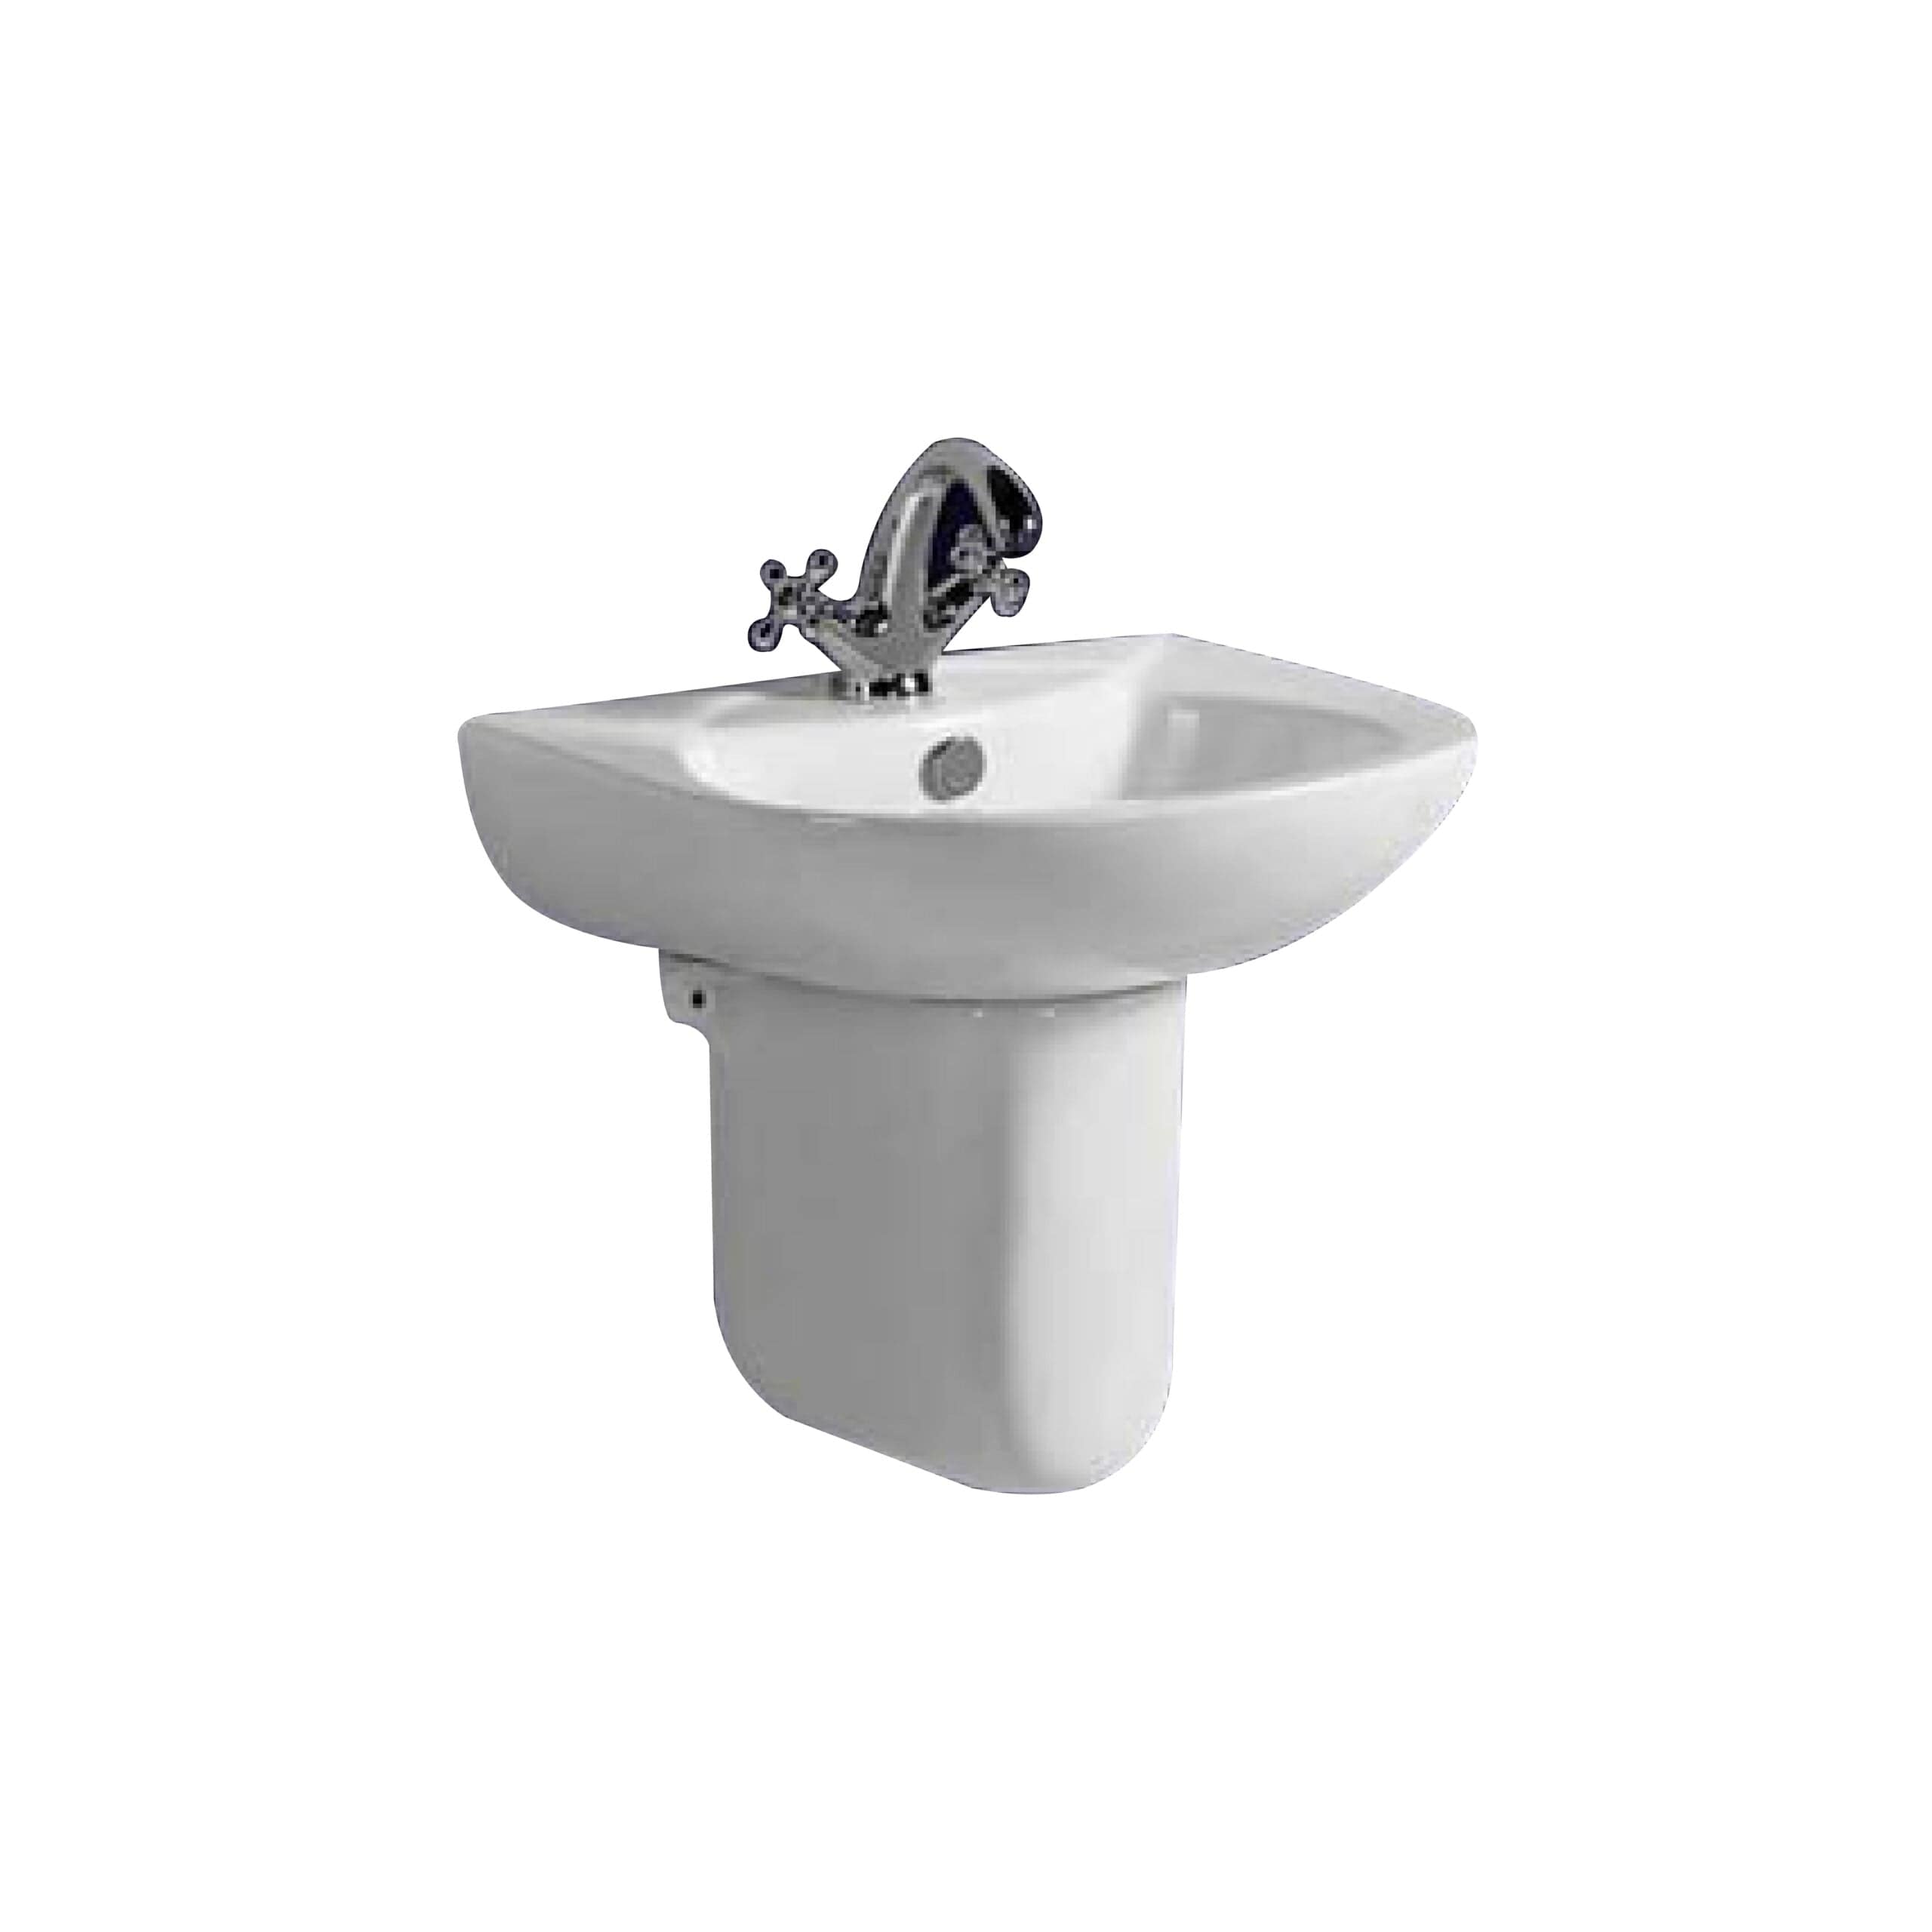 Half Pedestal Hand Wash Basin 520 x 440 x 440mm - C212 | Supply Master | Accra, Ghana Bathroom Sink Buy Tools hardware Building materials